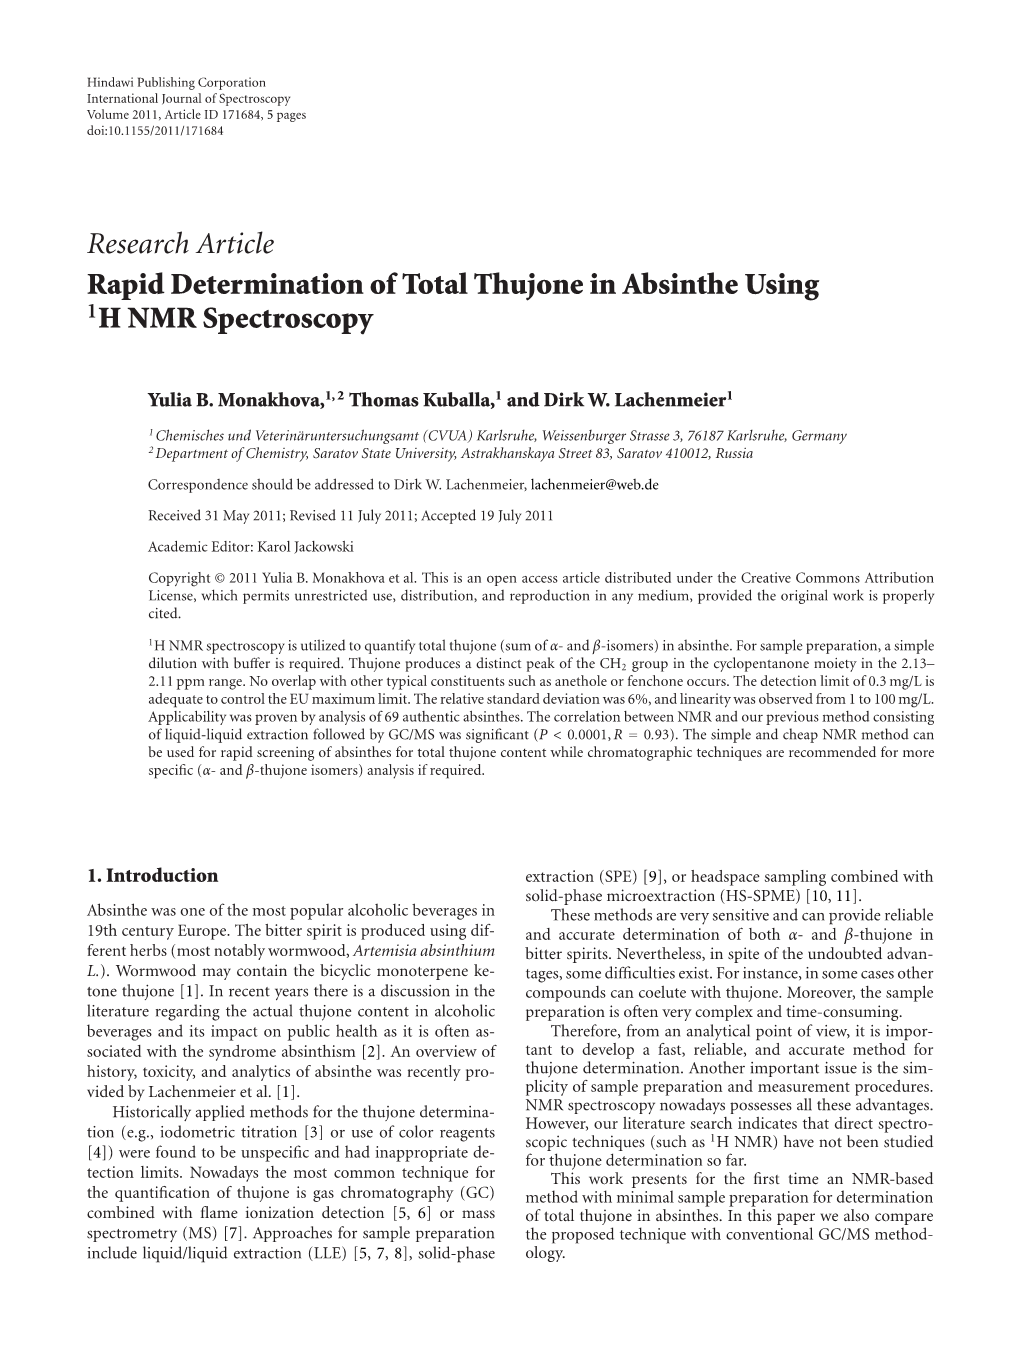 Rapid Determination of Total Thujone in Absinthe Using 1H NMR Spectroscopy